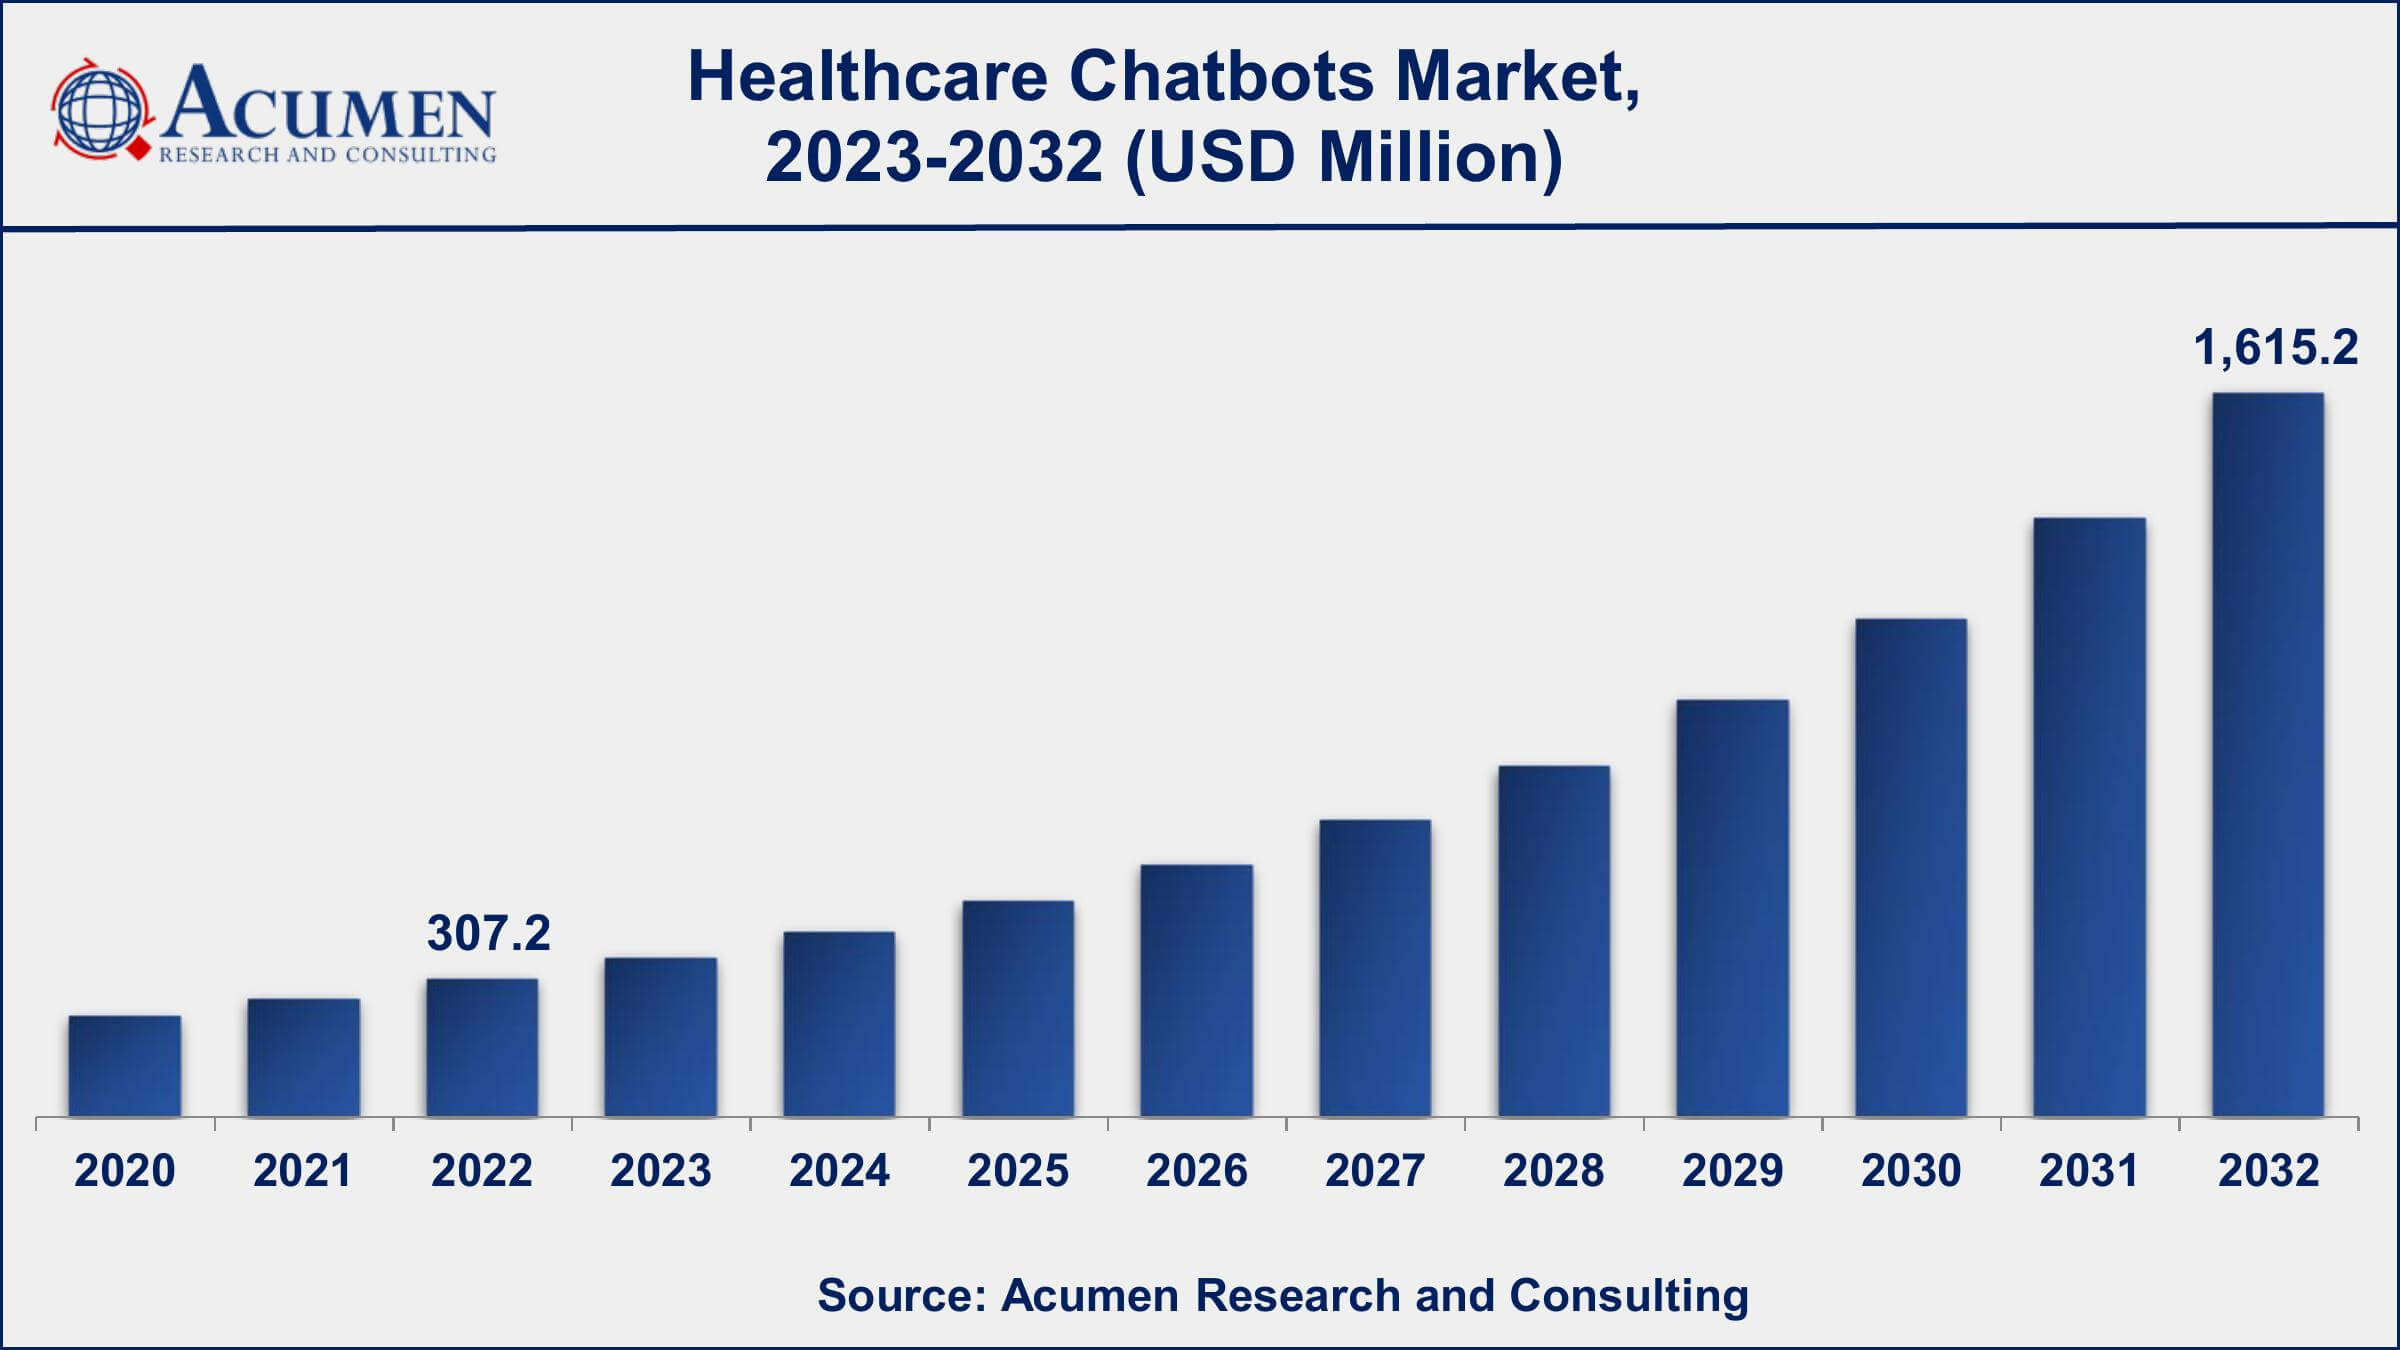 Healthcare Chatbots Market Drivers